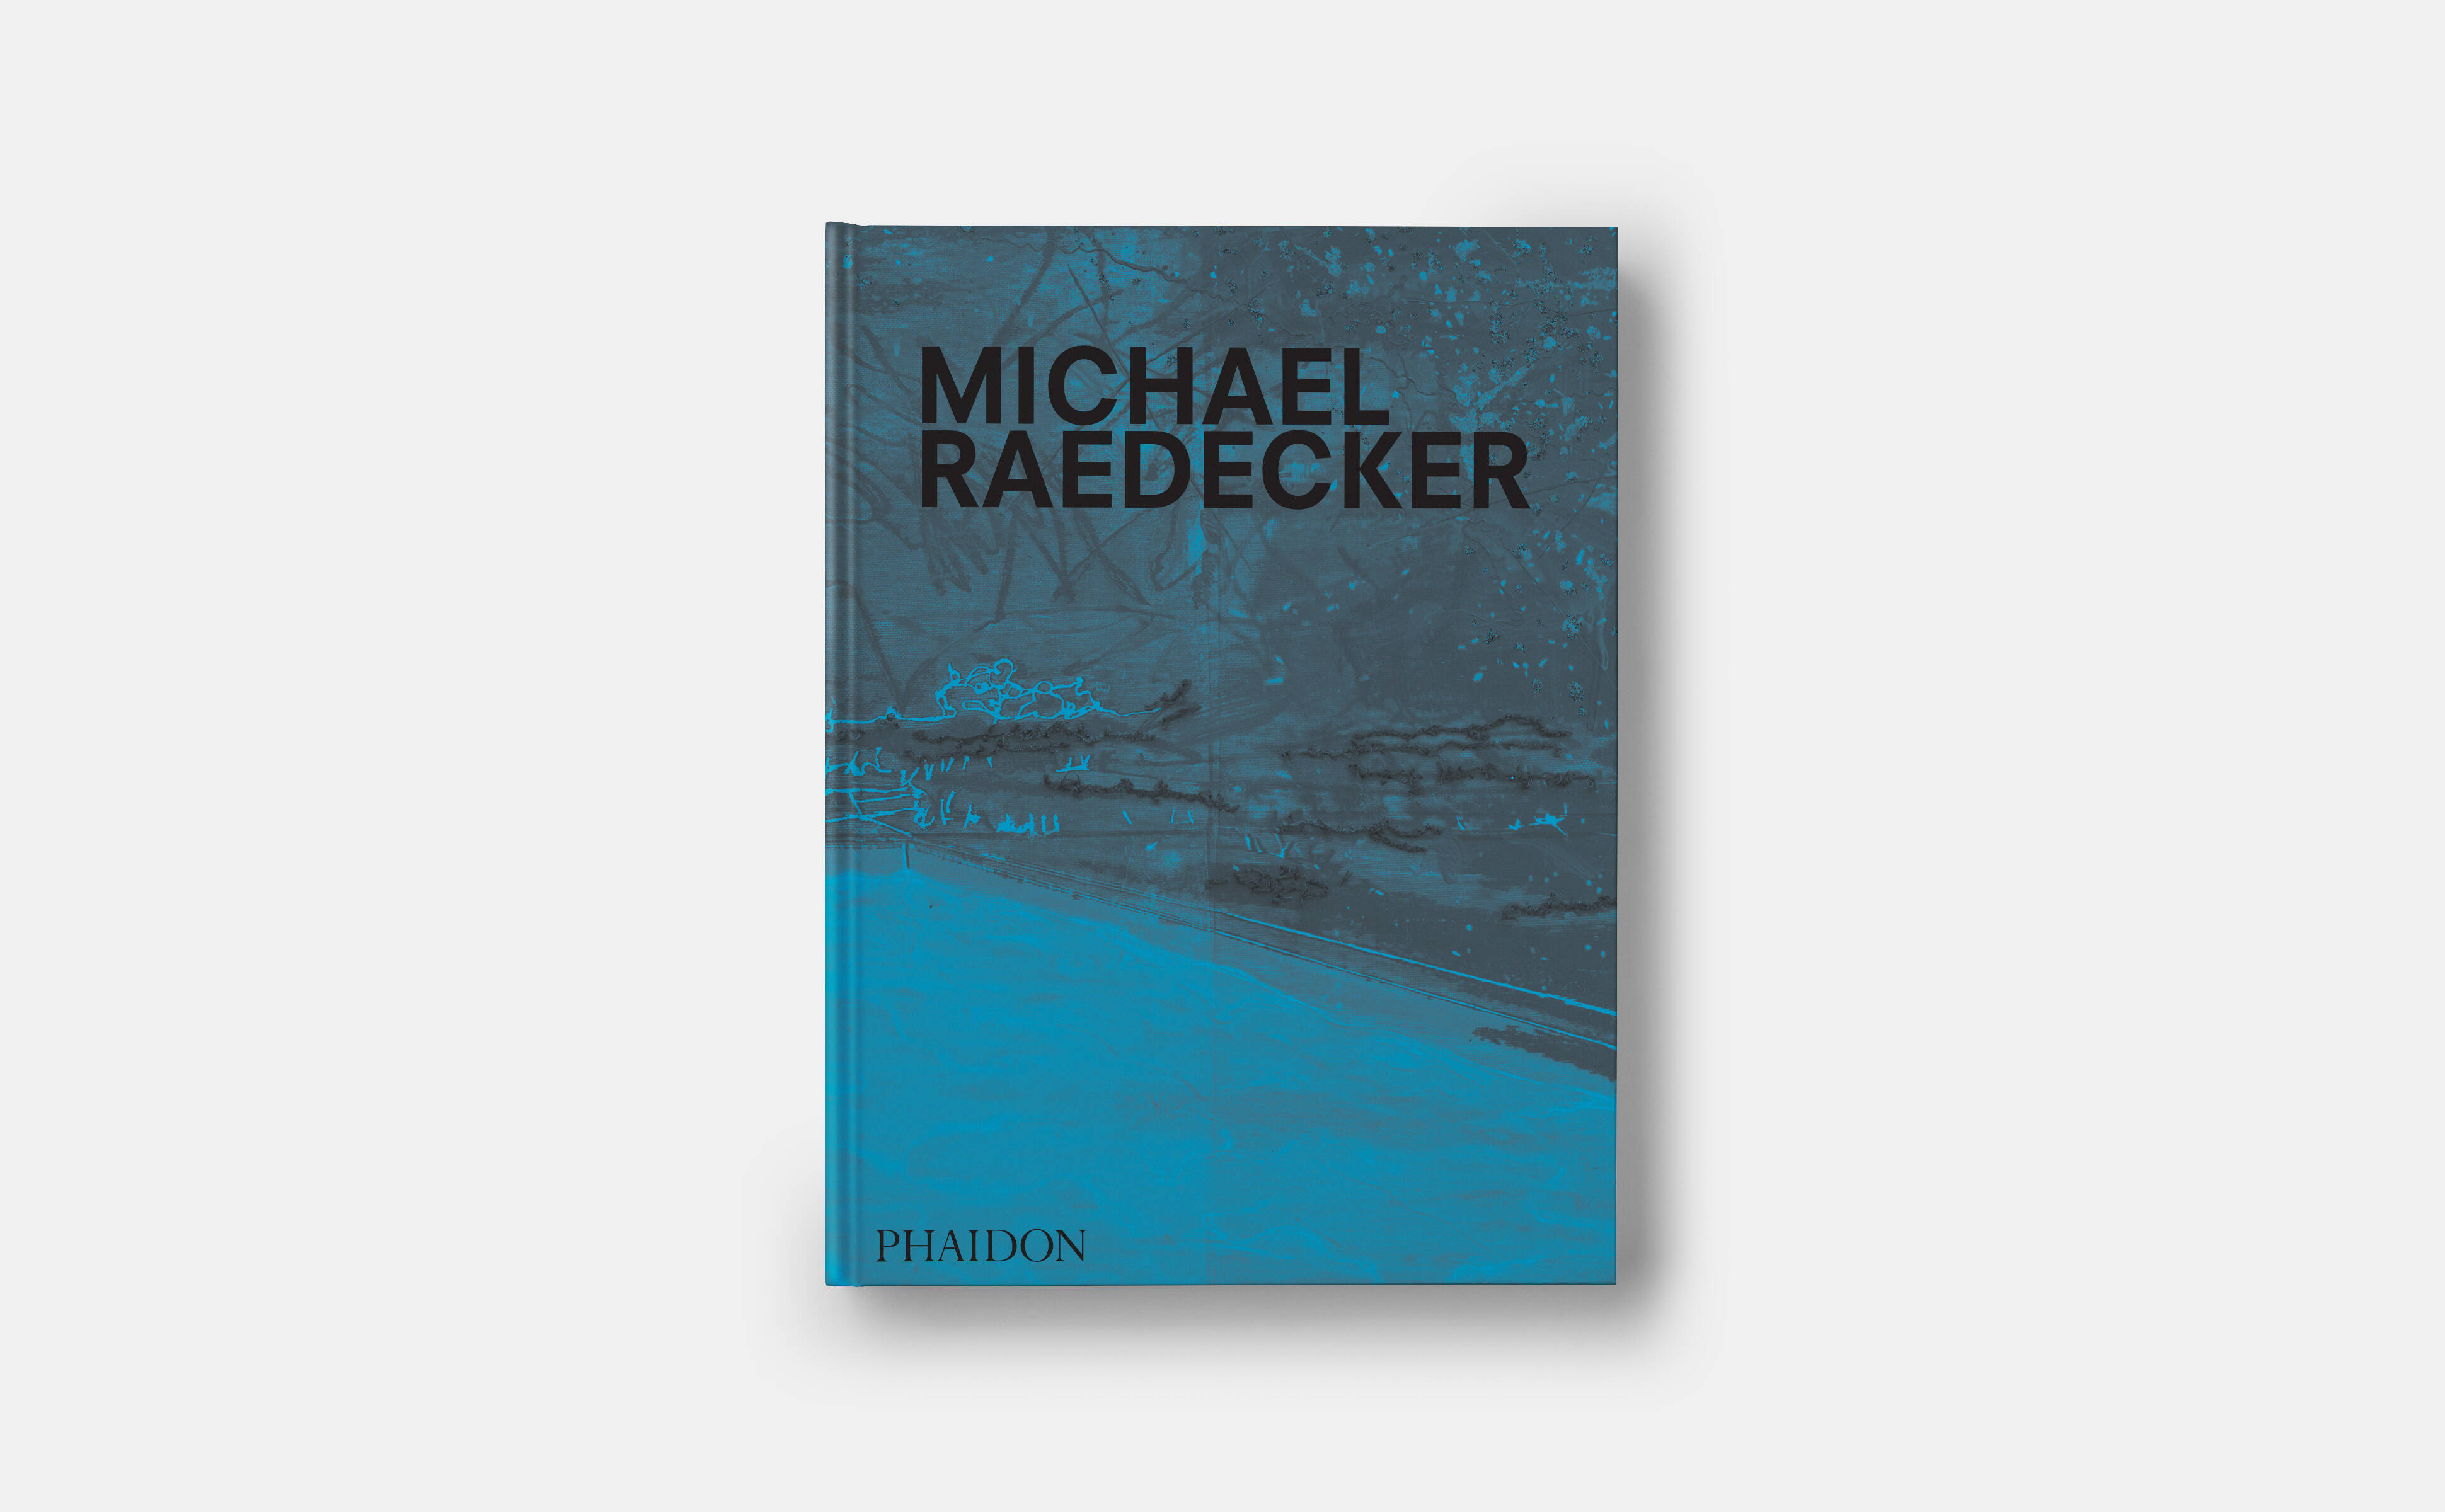 Michael Raedecker on Art, Life, & Everything In Between